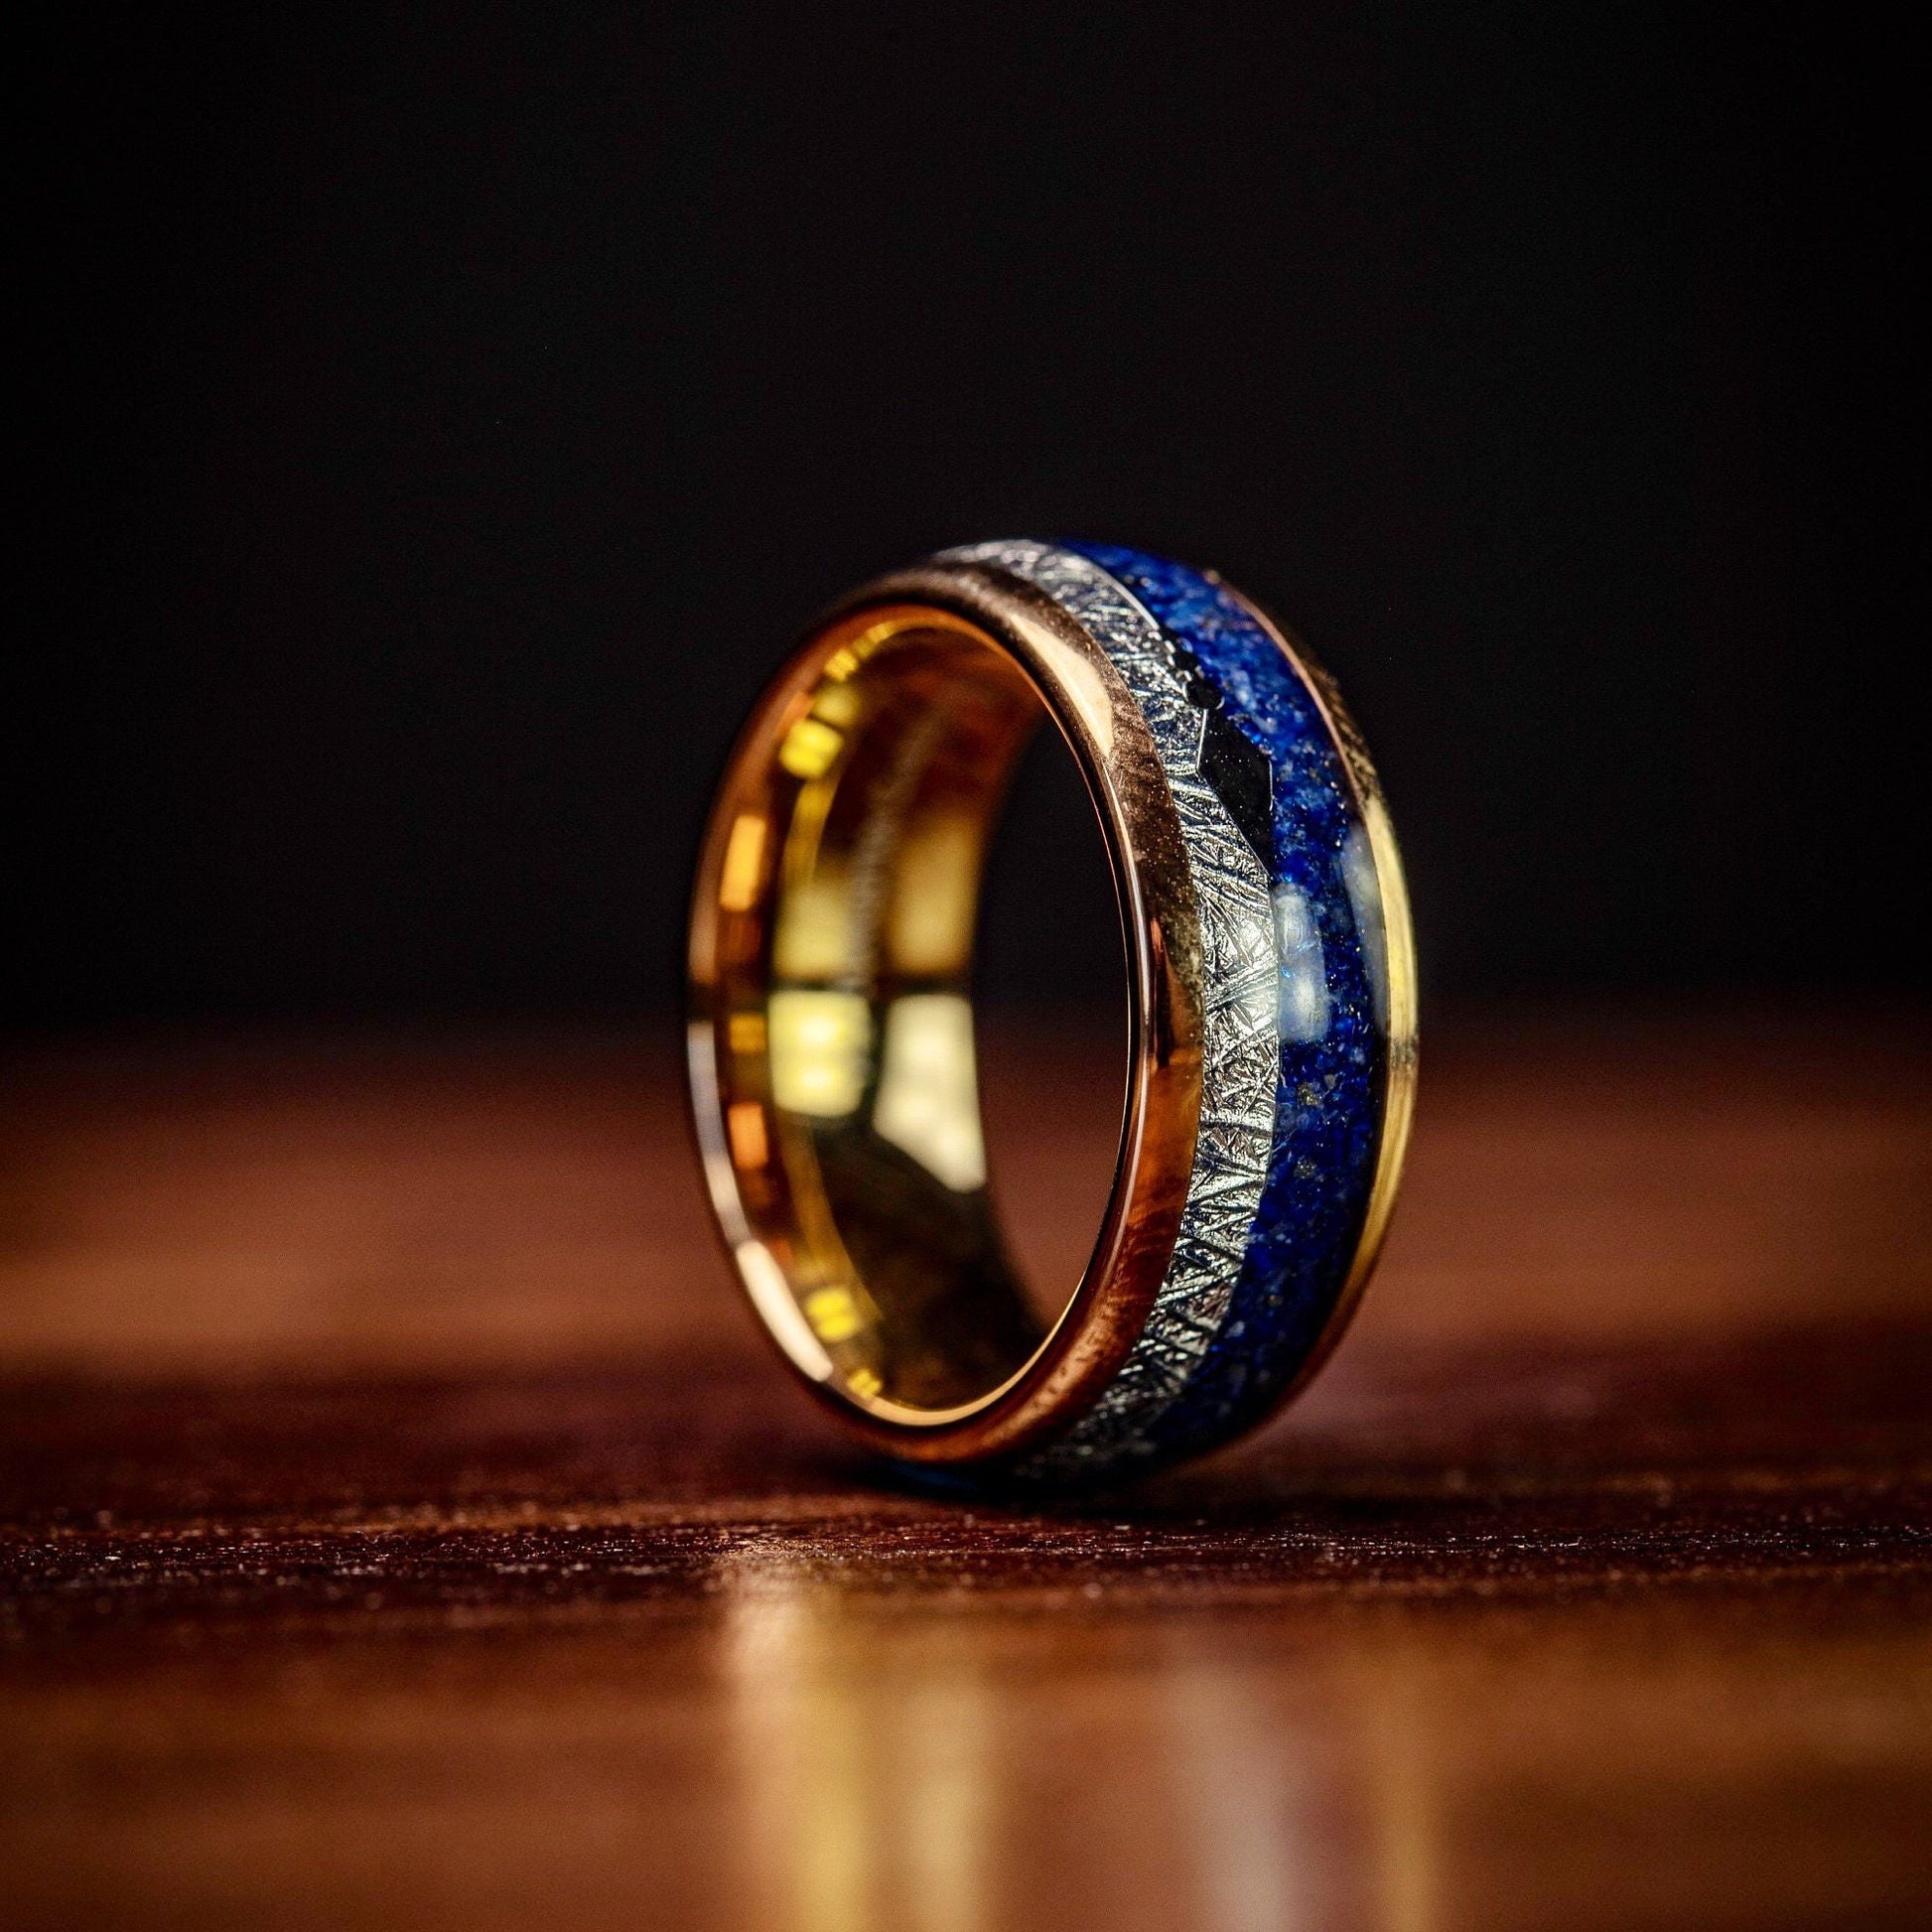 Unique rose gold wedding ring featuring lapis lazuli and meteorite accents.